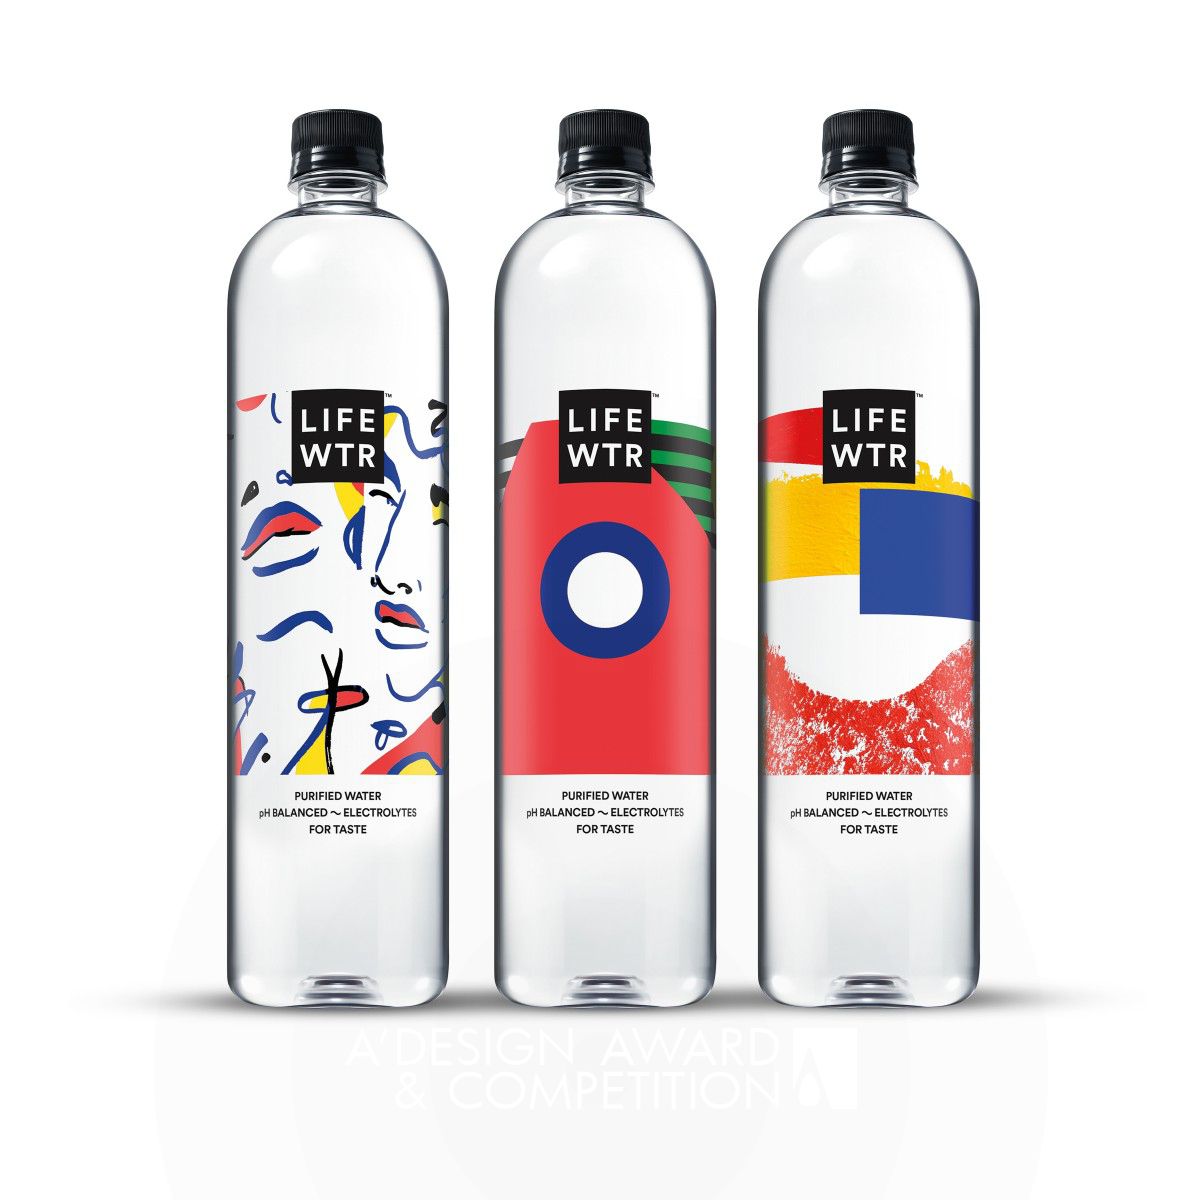 LIFEWTR Series 2: Women In Art Brand Packaging by PepsiCo Design & Innovation